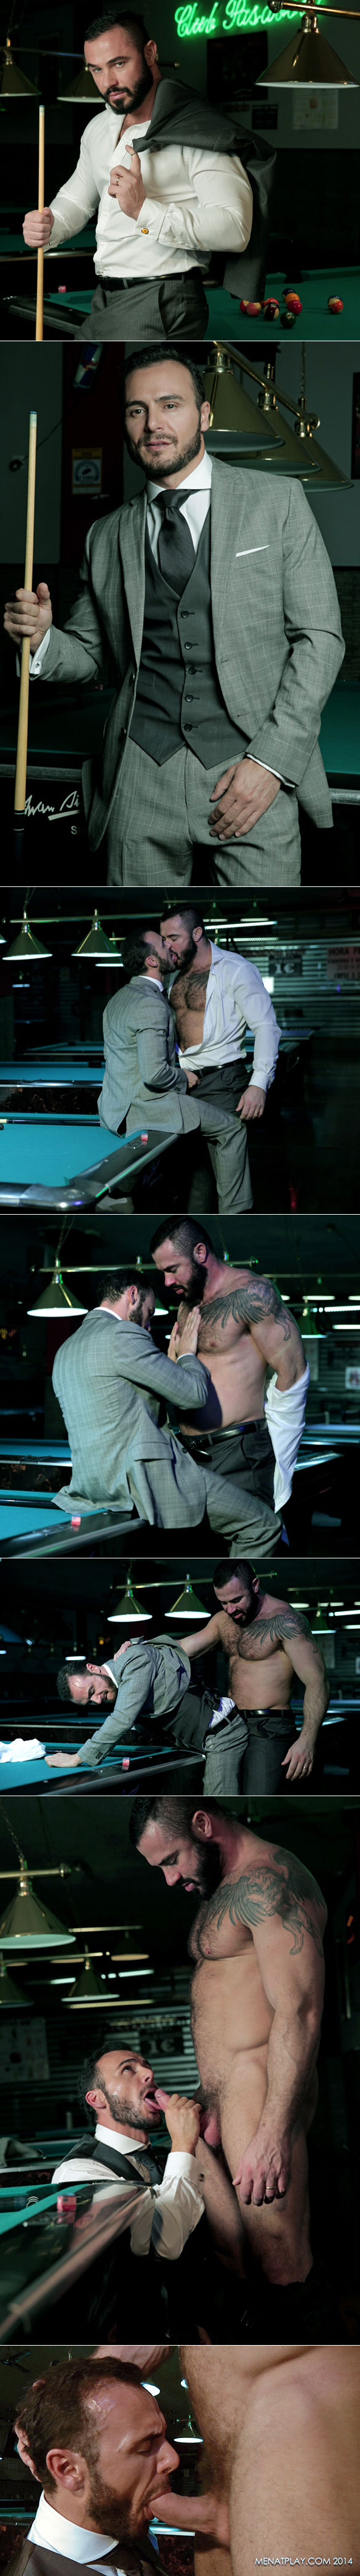 MenAtPlay: Jessy Ares pounds Gabriel Vanderloo in "Break Point"